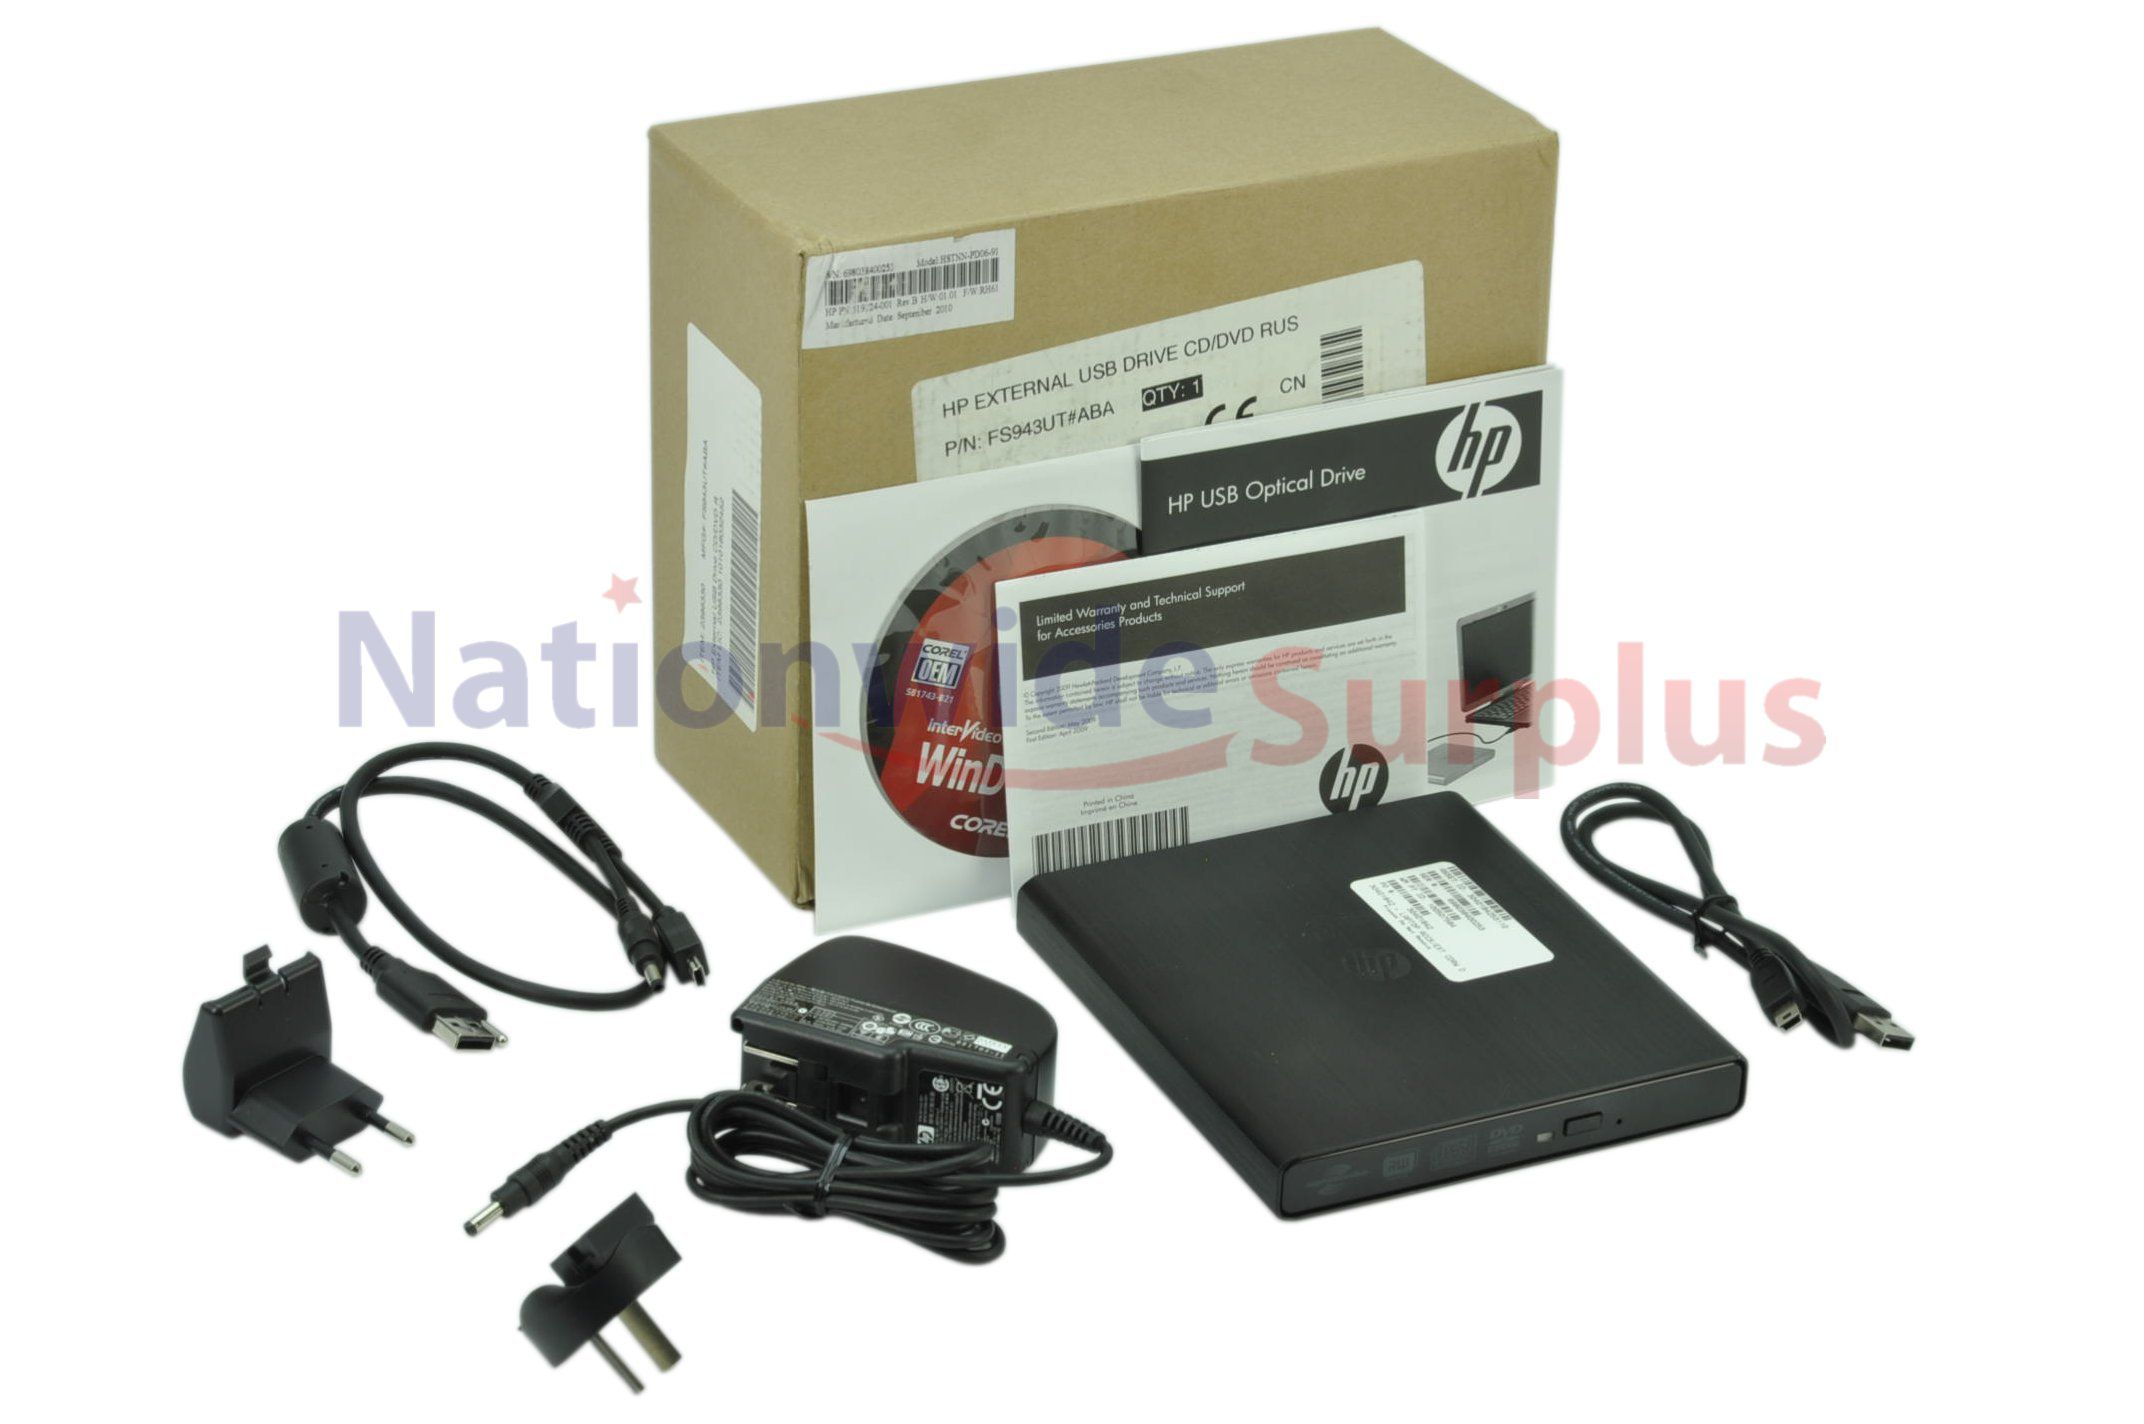   OEM HP External USB Drive CD RW/DVD RW Slim 519700 001 w Lightscribe